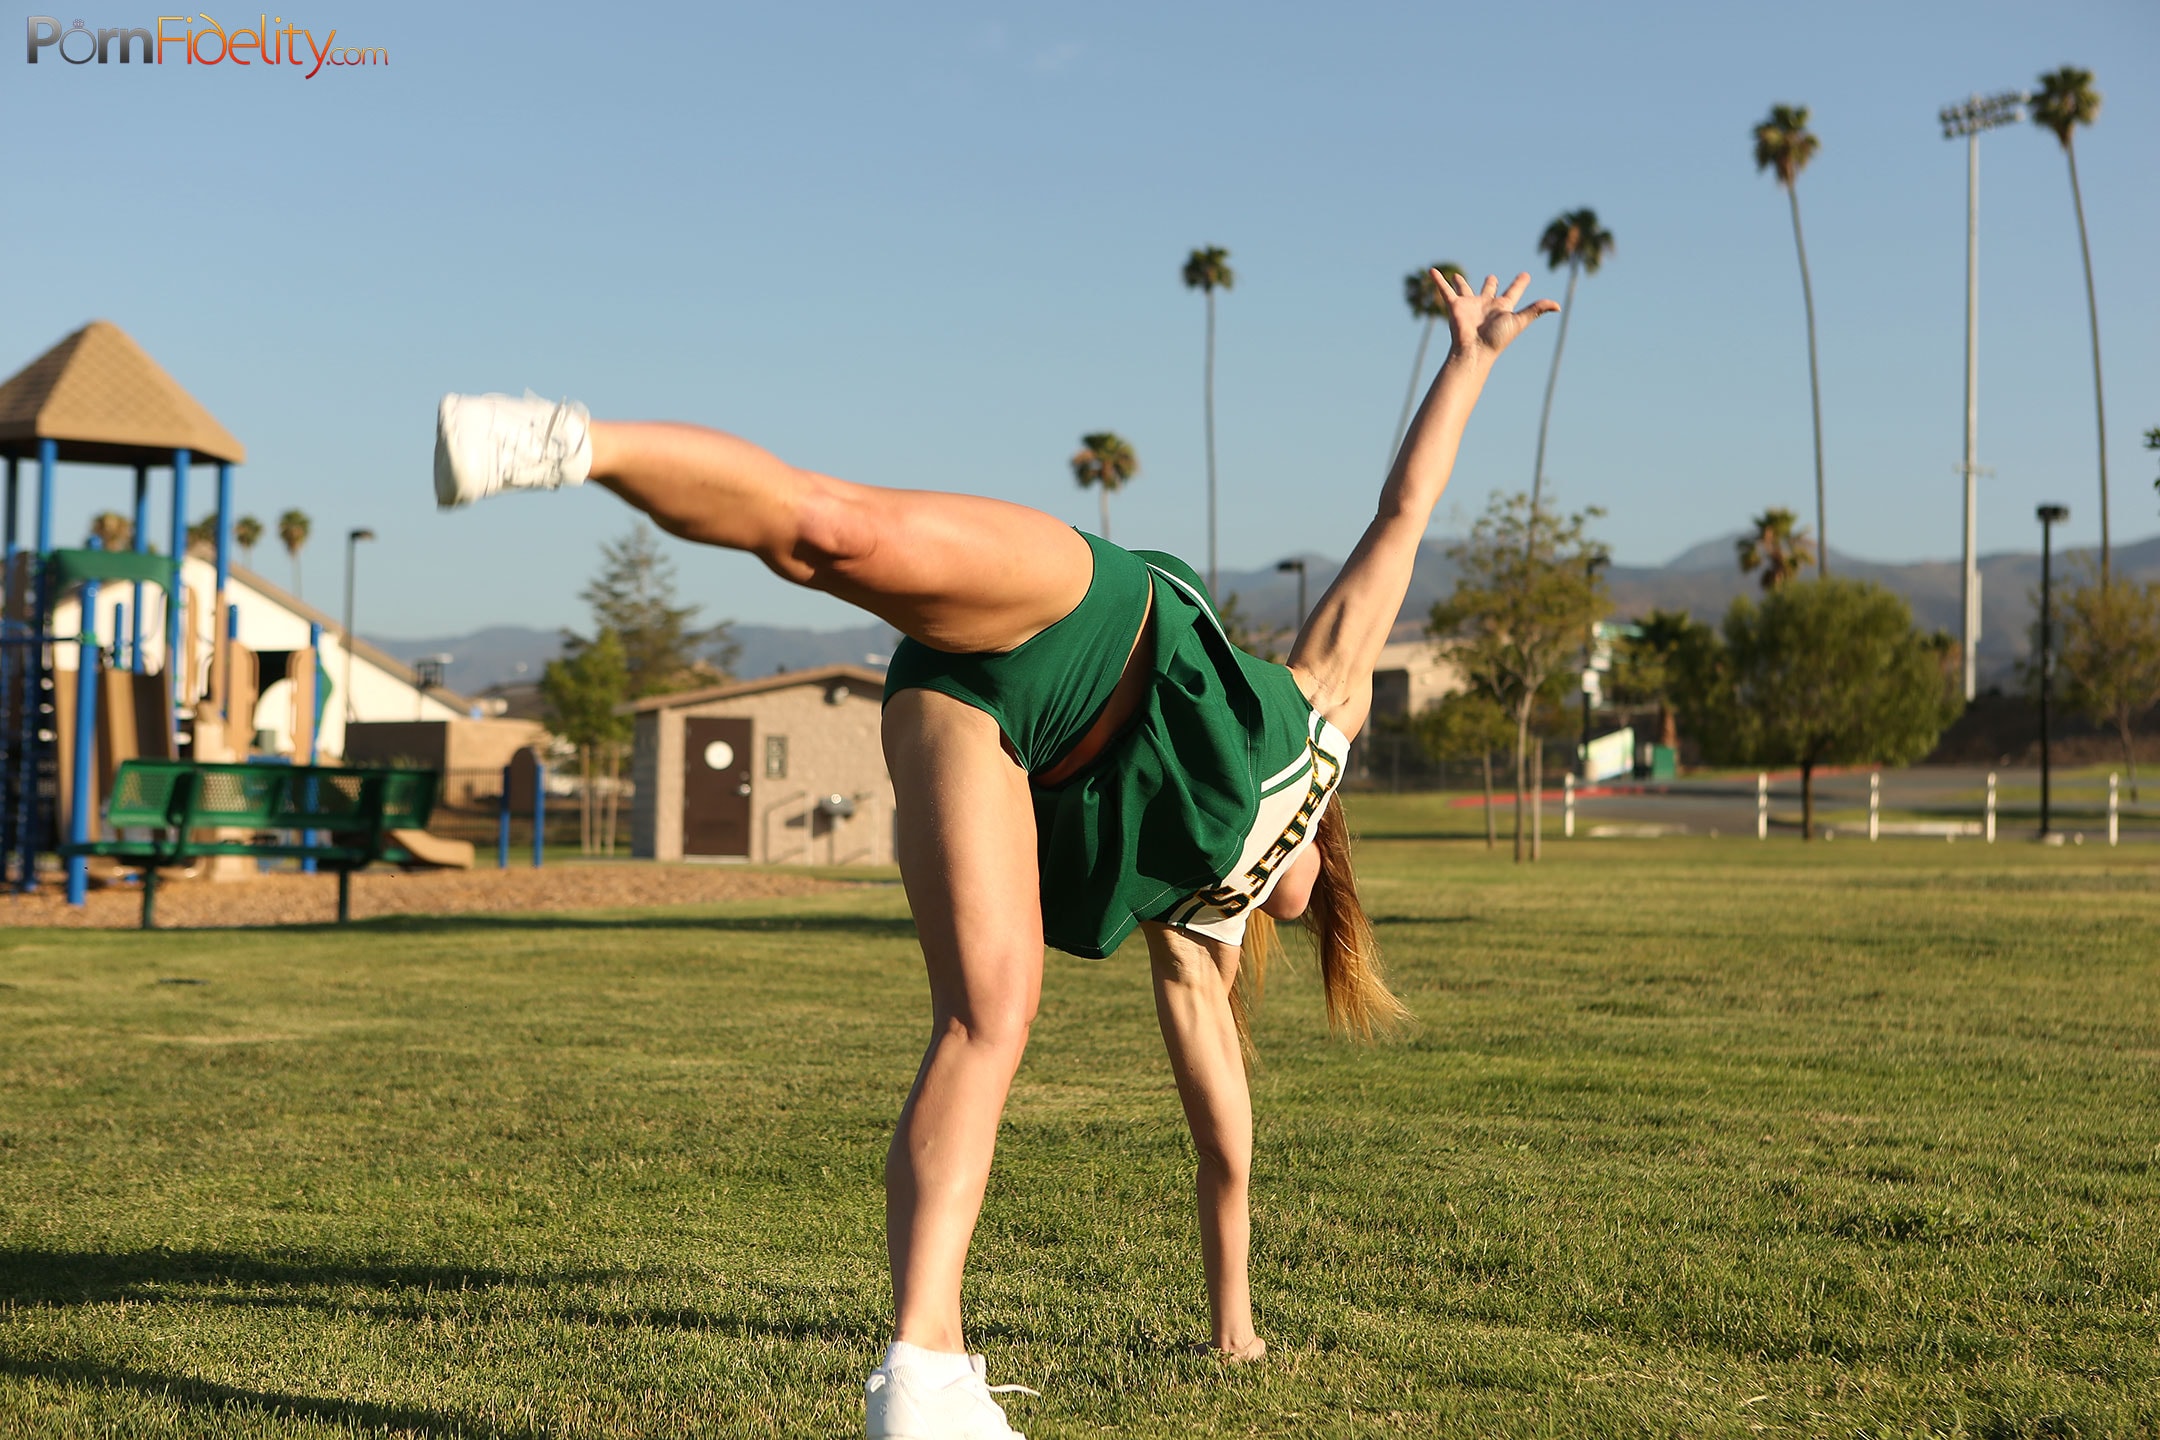 Porn Fidelity 'TFSN Cheerleaders 2' starring Nicole Clitman (Photo 32)